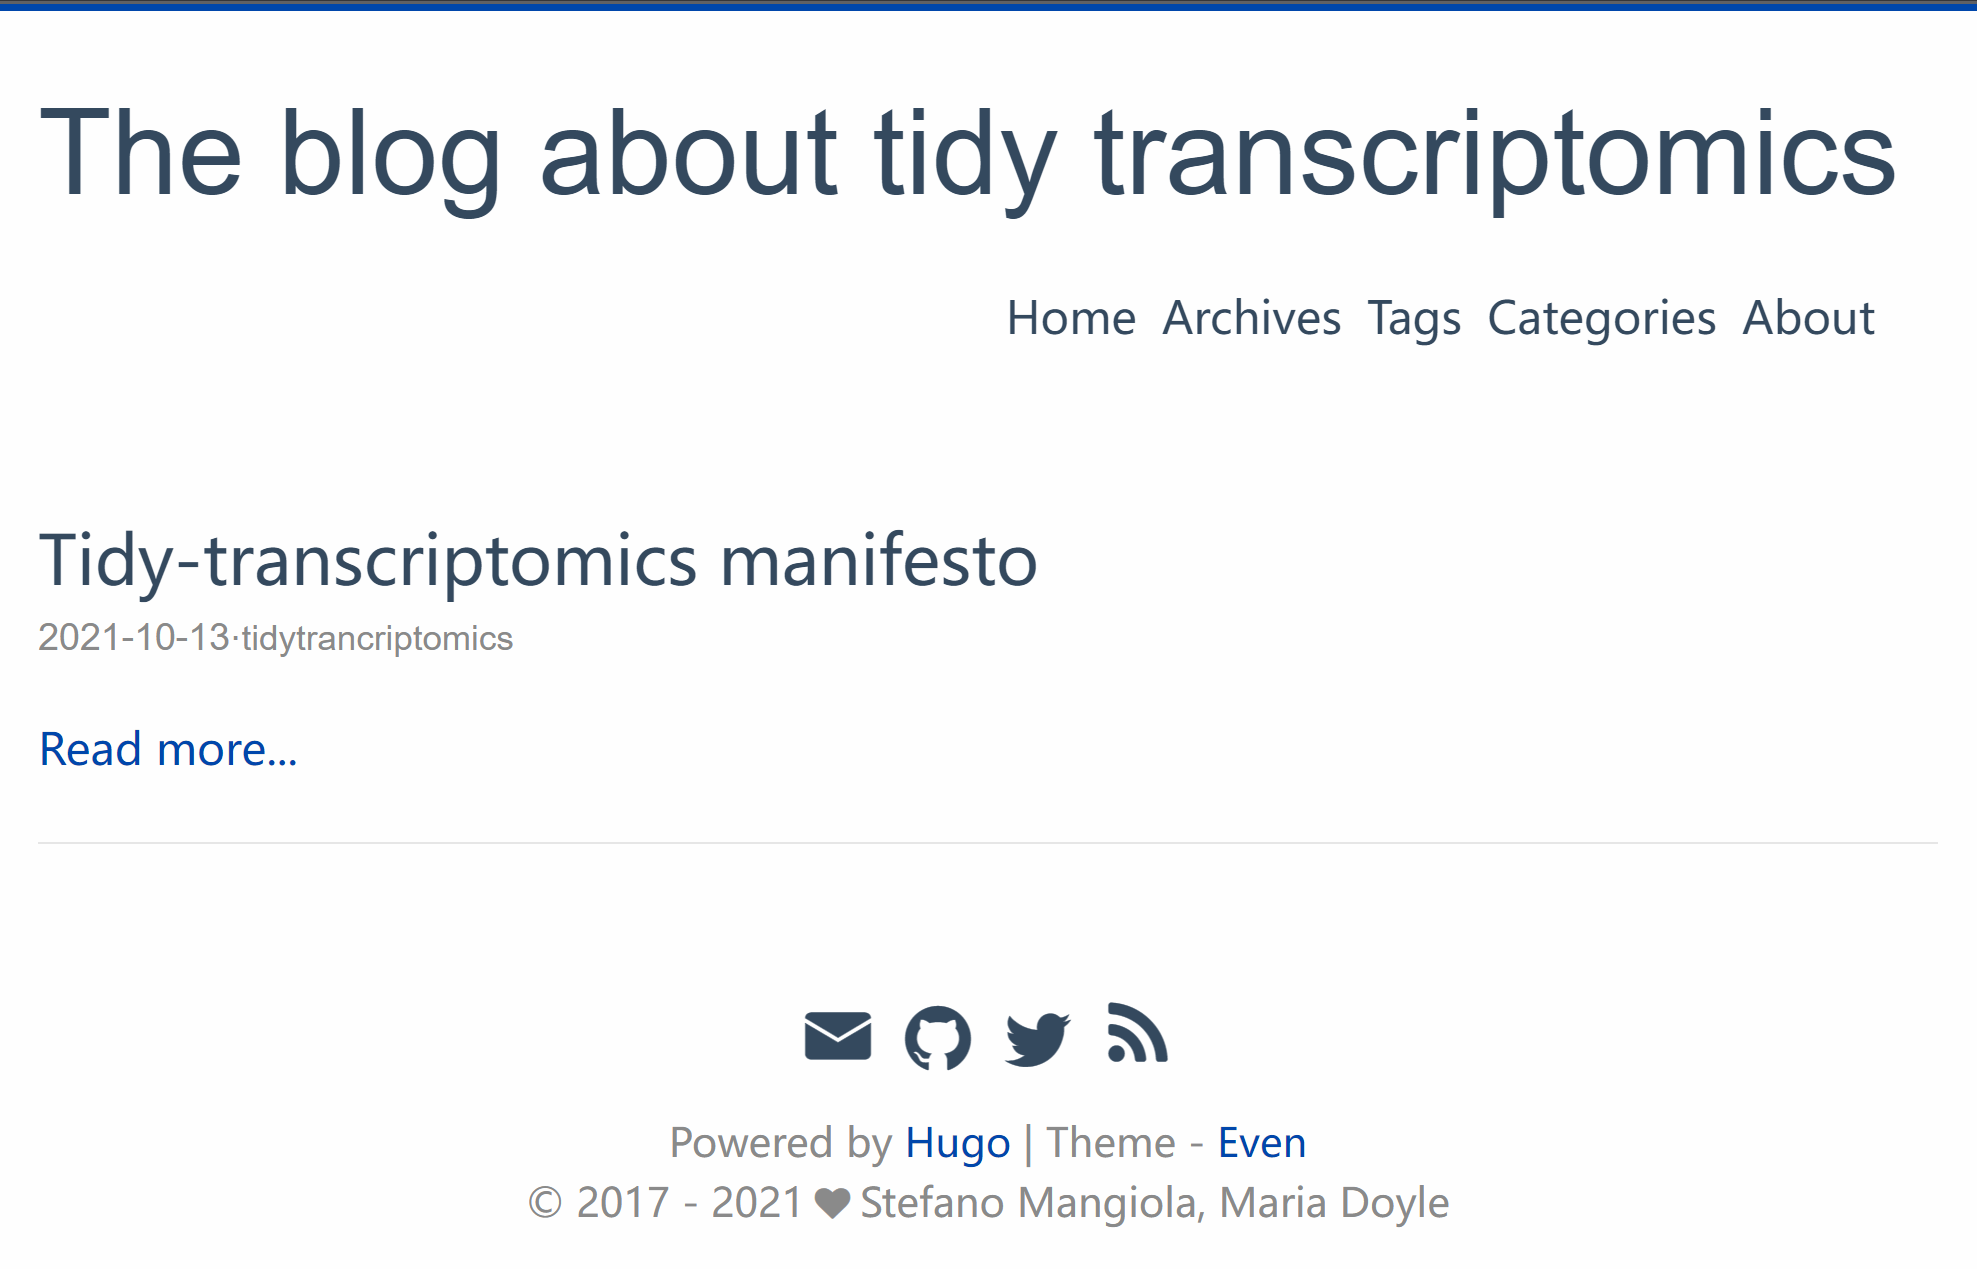 [Tidy Transcriptomics blog](https://stemangiola.github.io/tidytranscriptomics/)